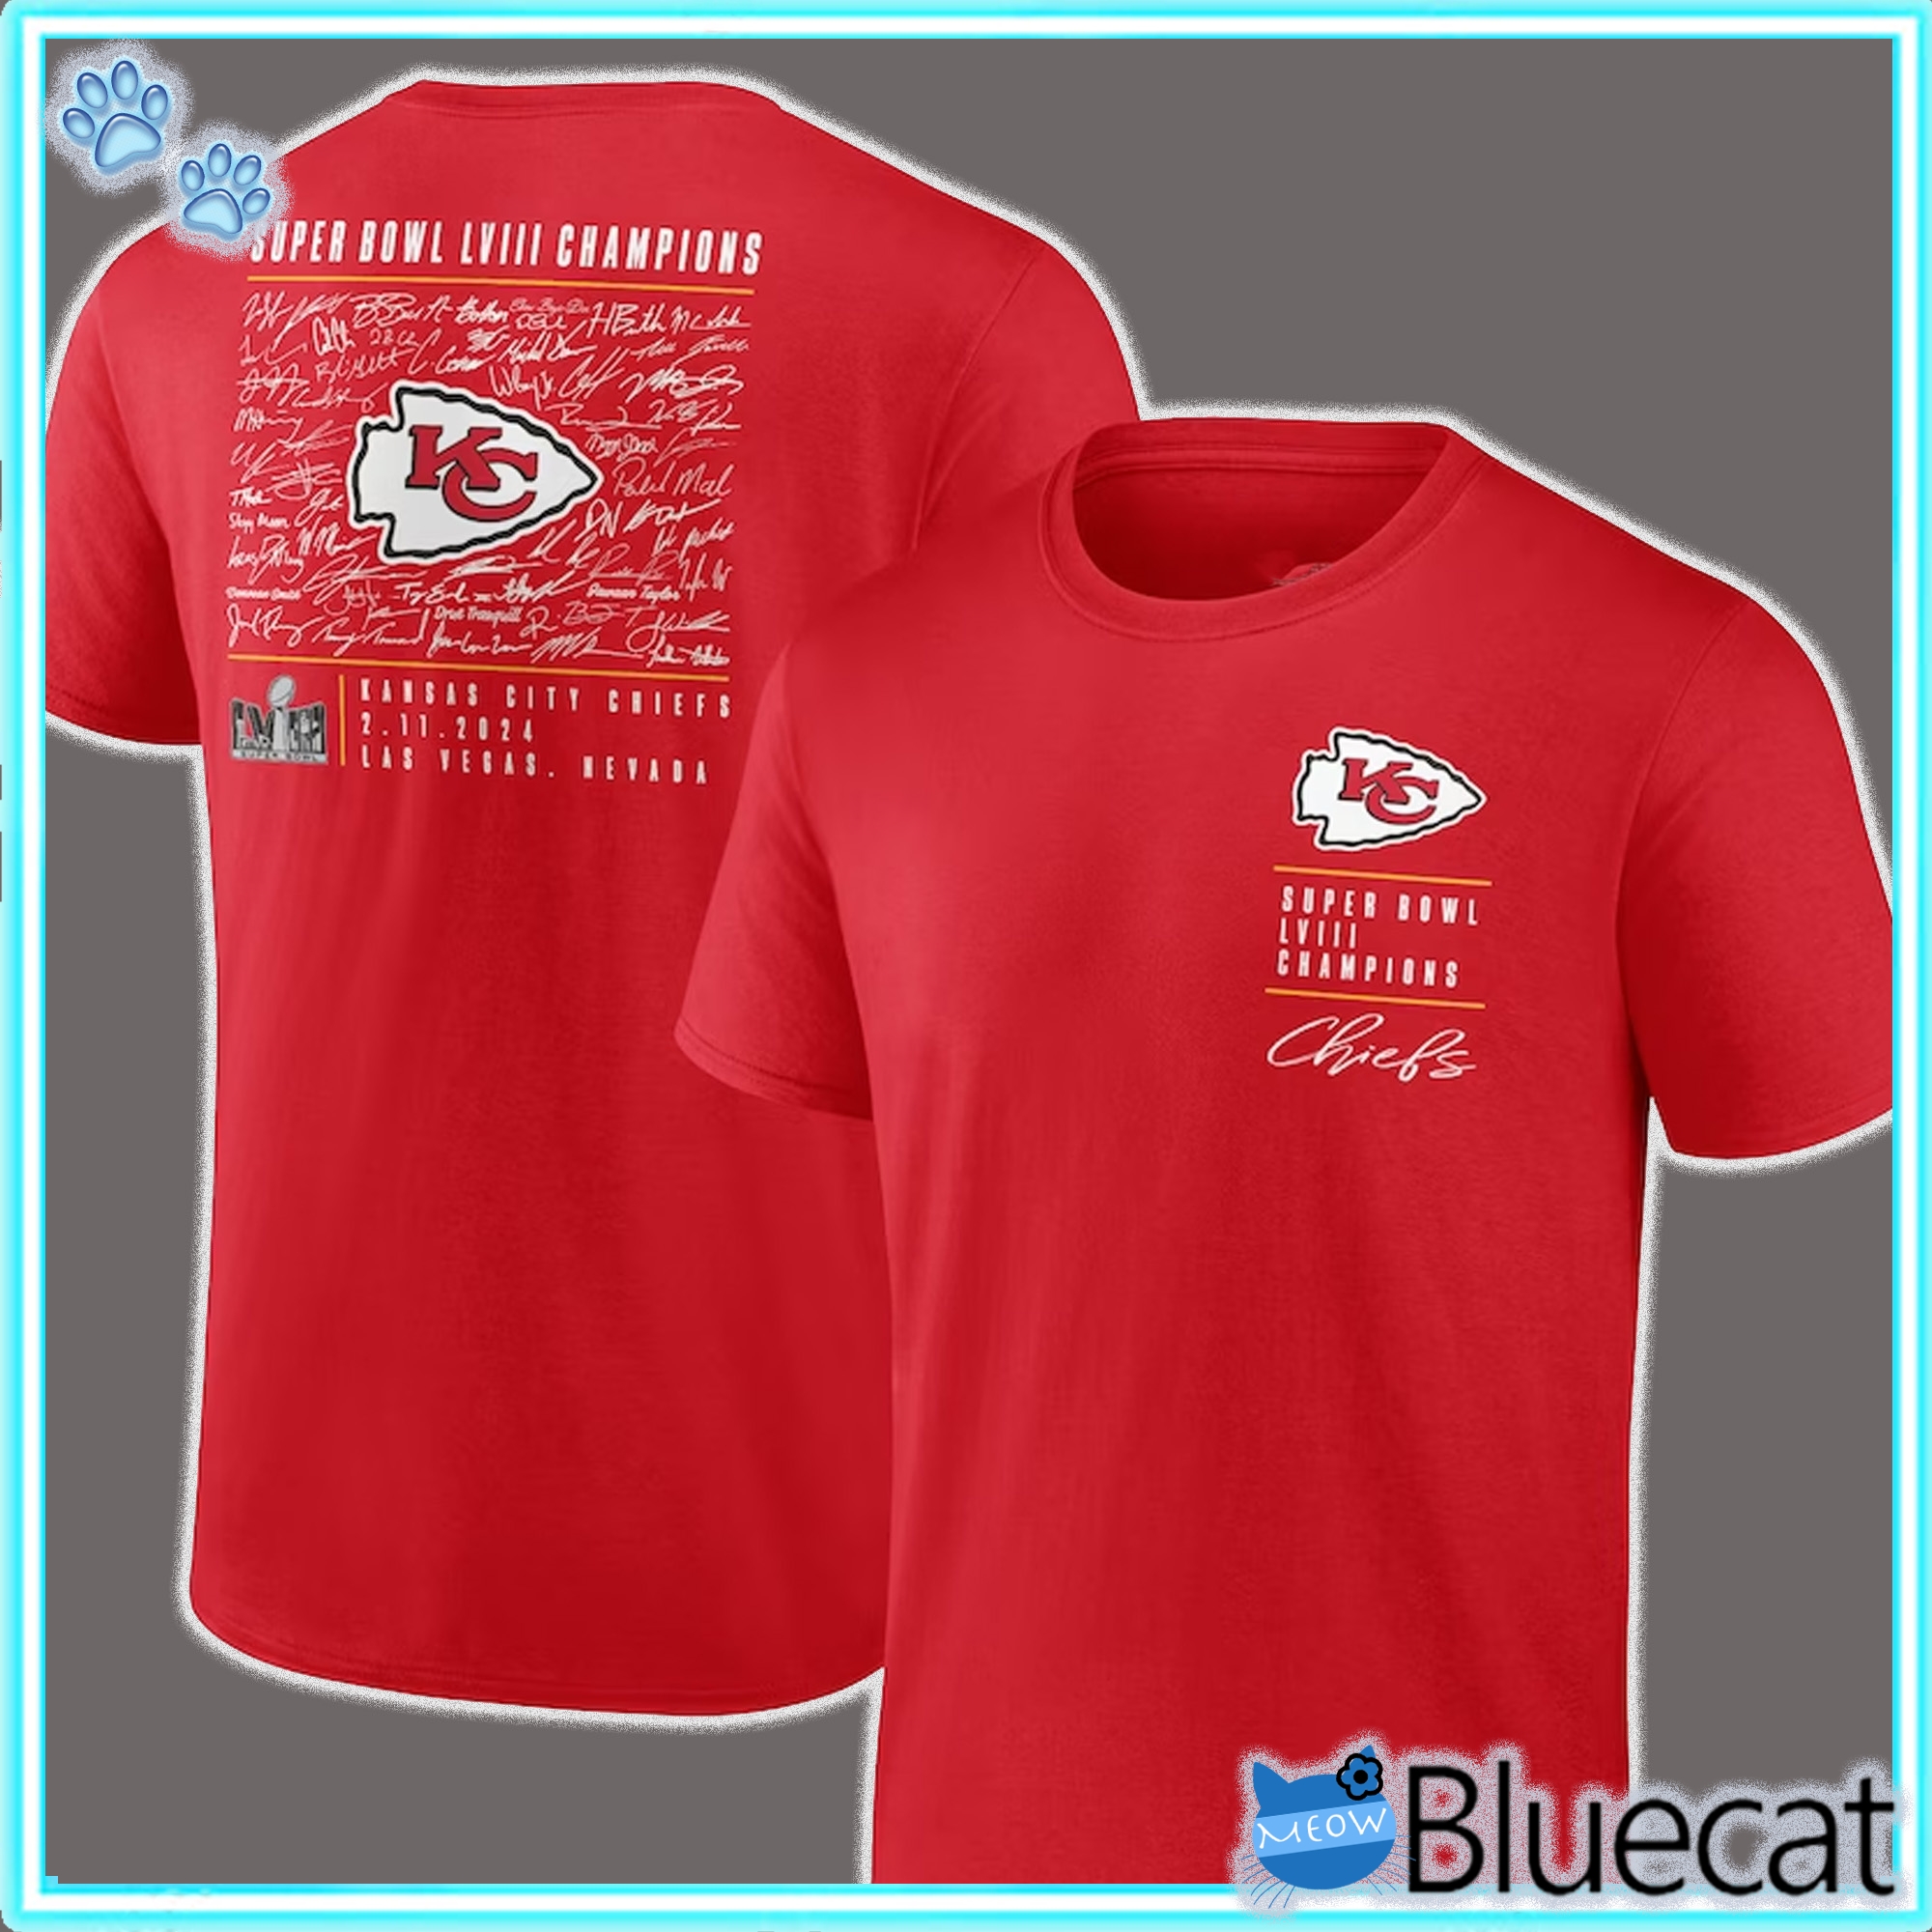 Kansas City Chiefs Fanatics Branded Super Bowl Lviii Champions Roster Autograph Signing T-shirt Sweatshirt 